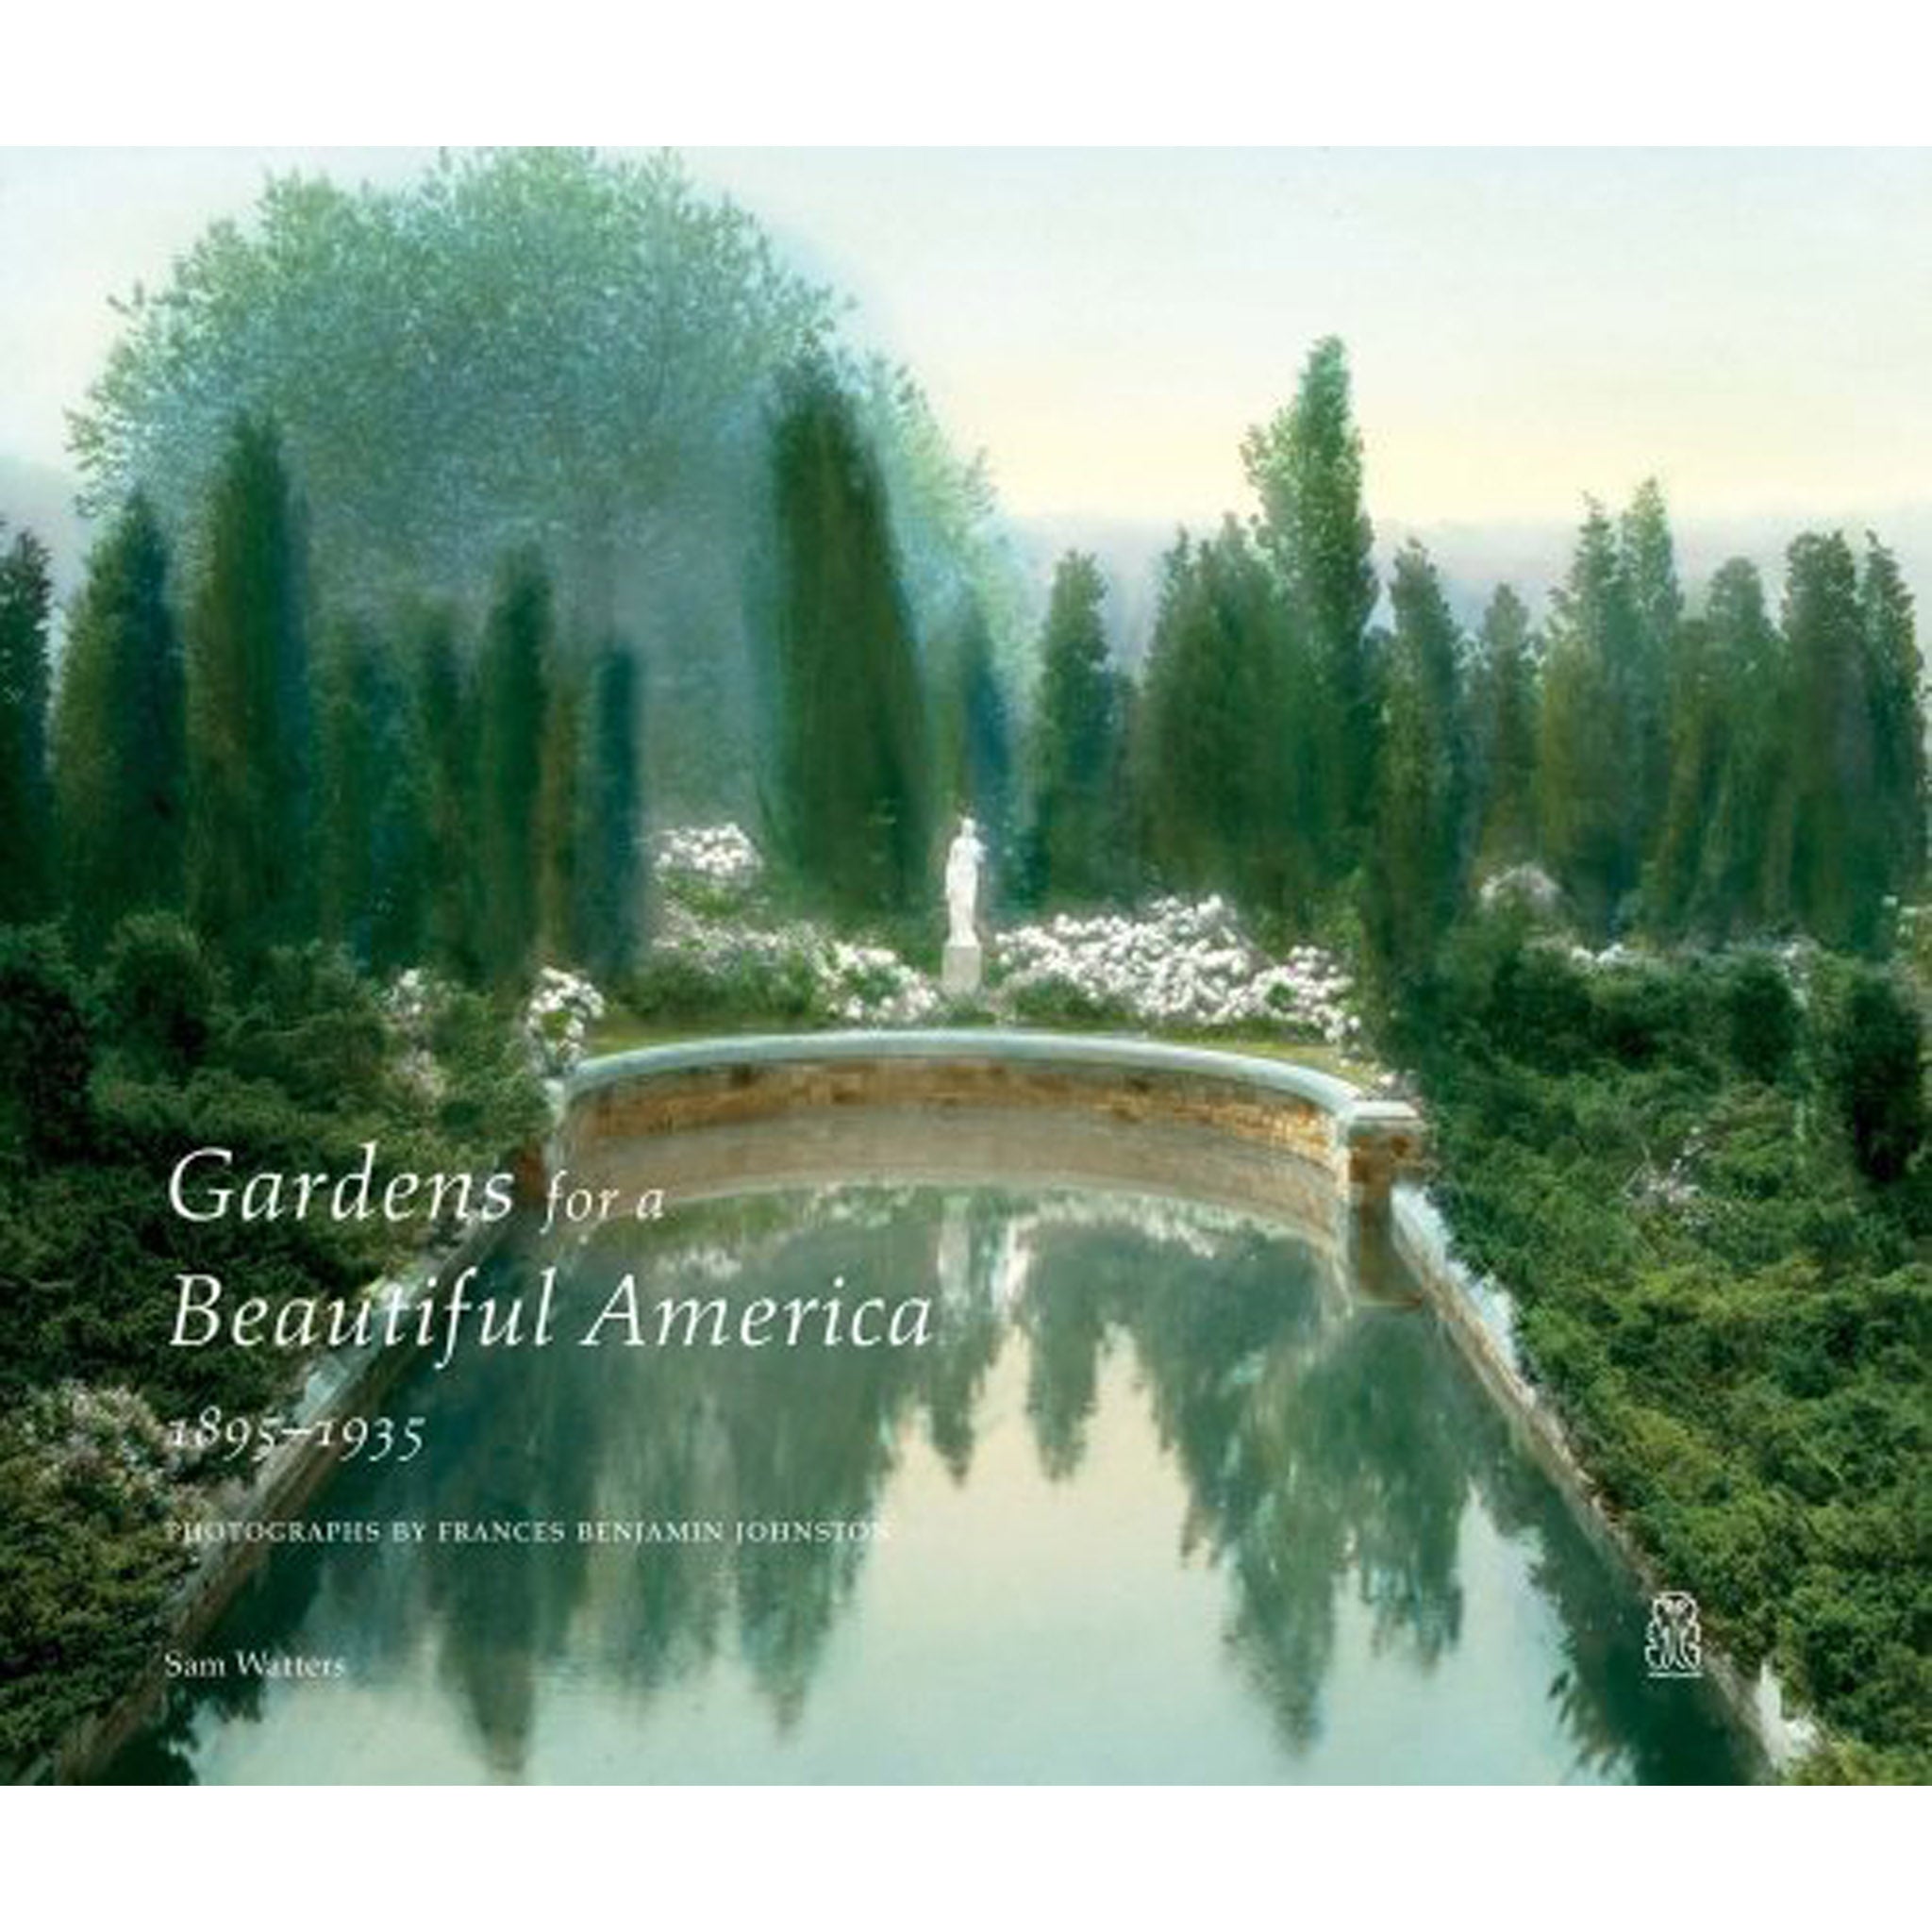 Gardens for a Beautiful America